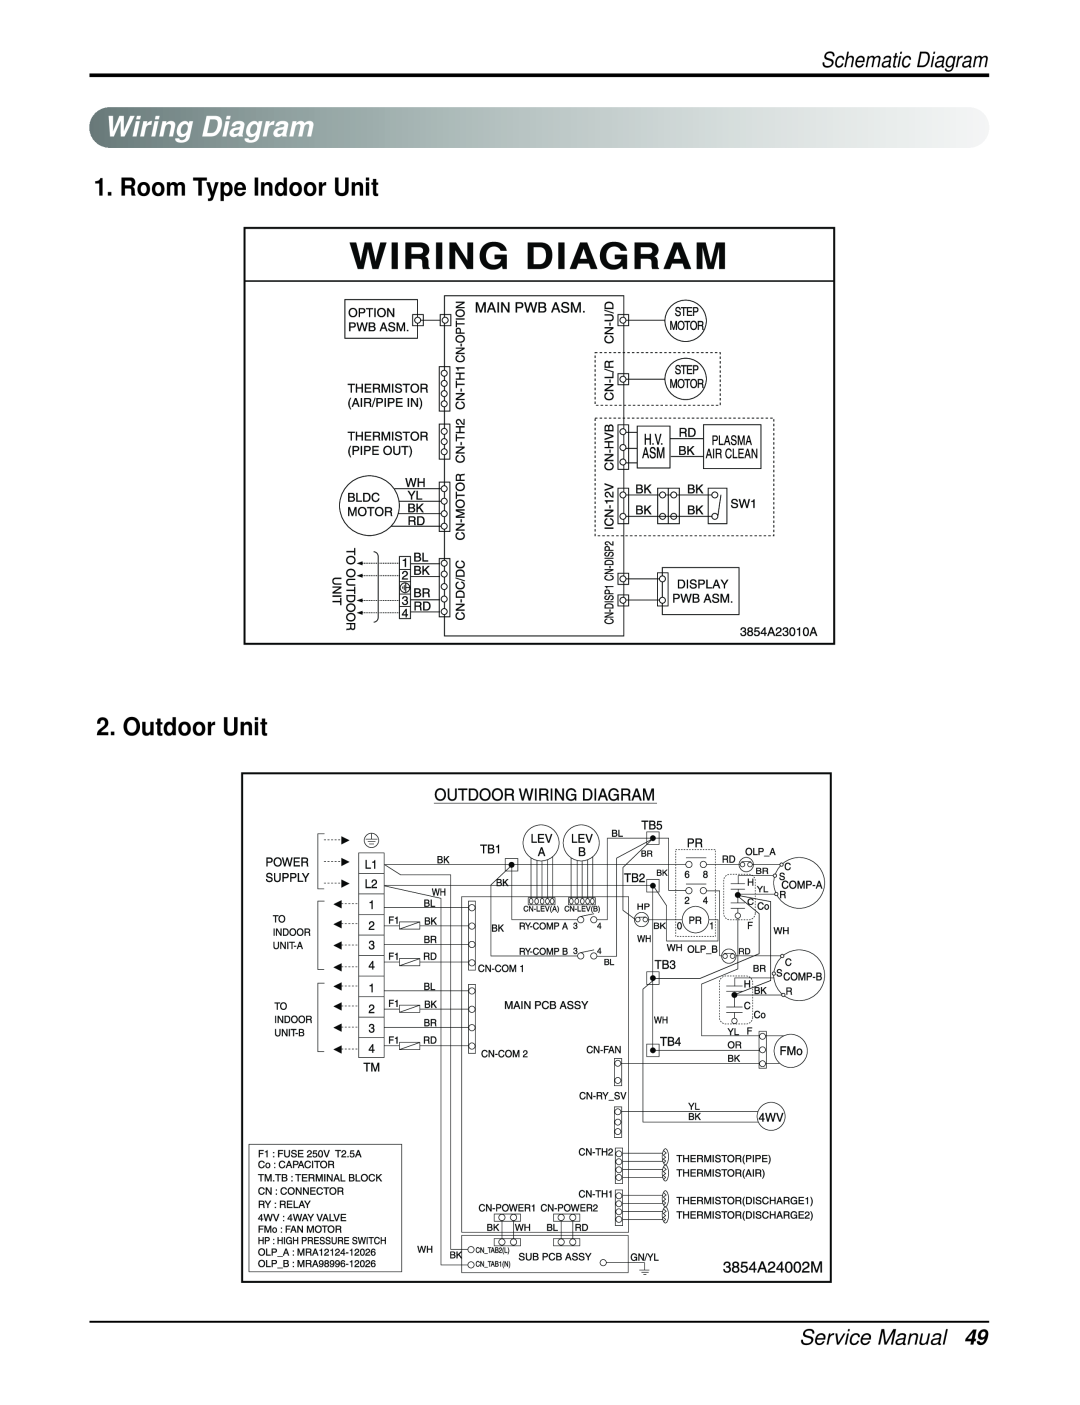 Heat Controller DMH18DB-1 manual Wiring Diagram, Room Type Indoor Unit 2. Outdoor Unit, Schematic Diagram, Service Manual 